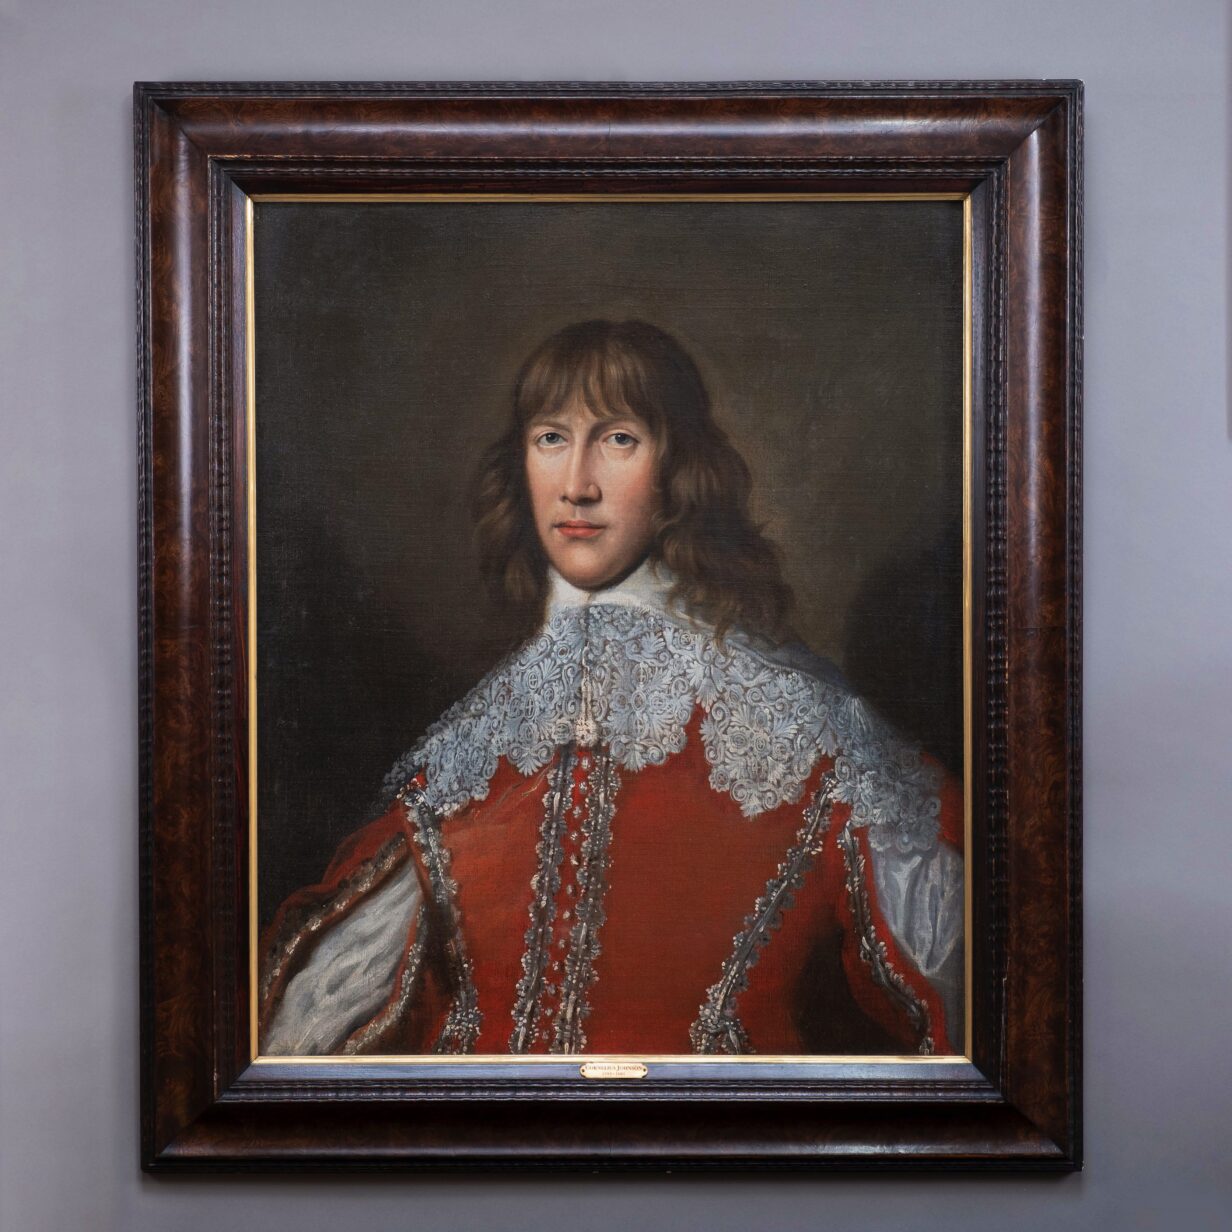 Attributed to cornelius de neve, portrait of john, lord belasyse